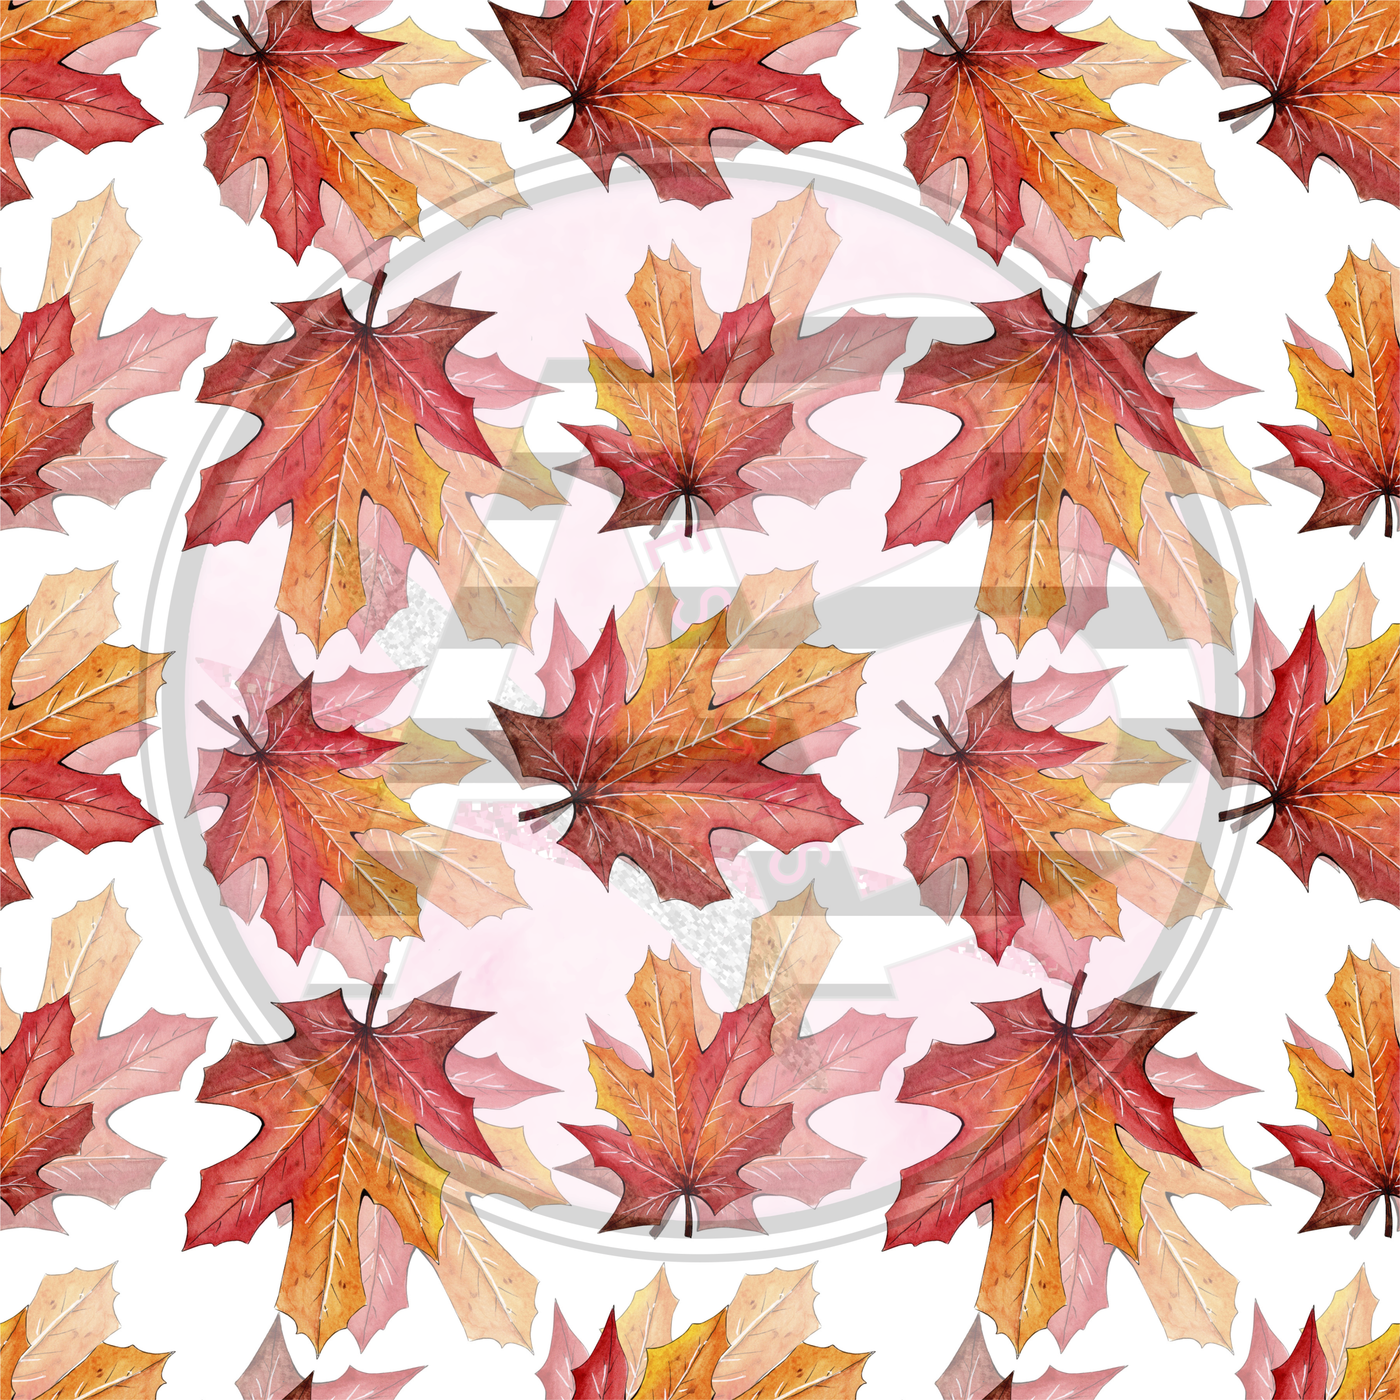 Fall Sub Box Leaves Full Sheet 12 x 12 - Clear Sheet